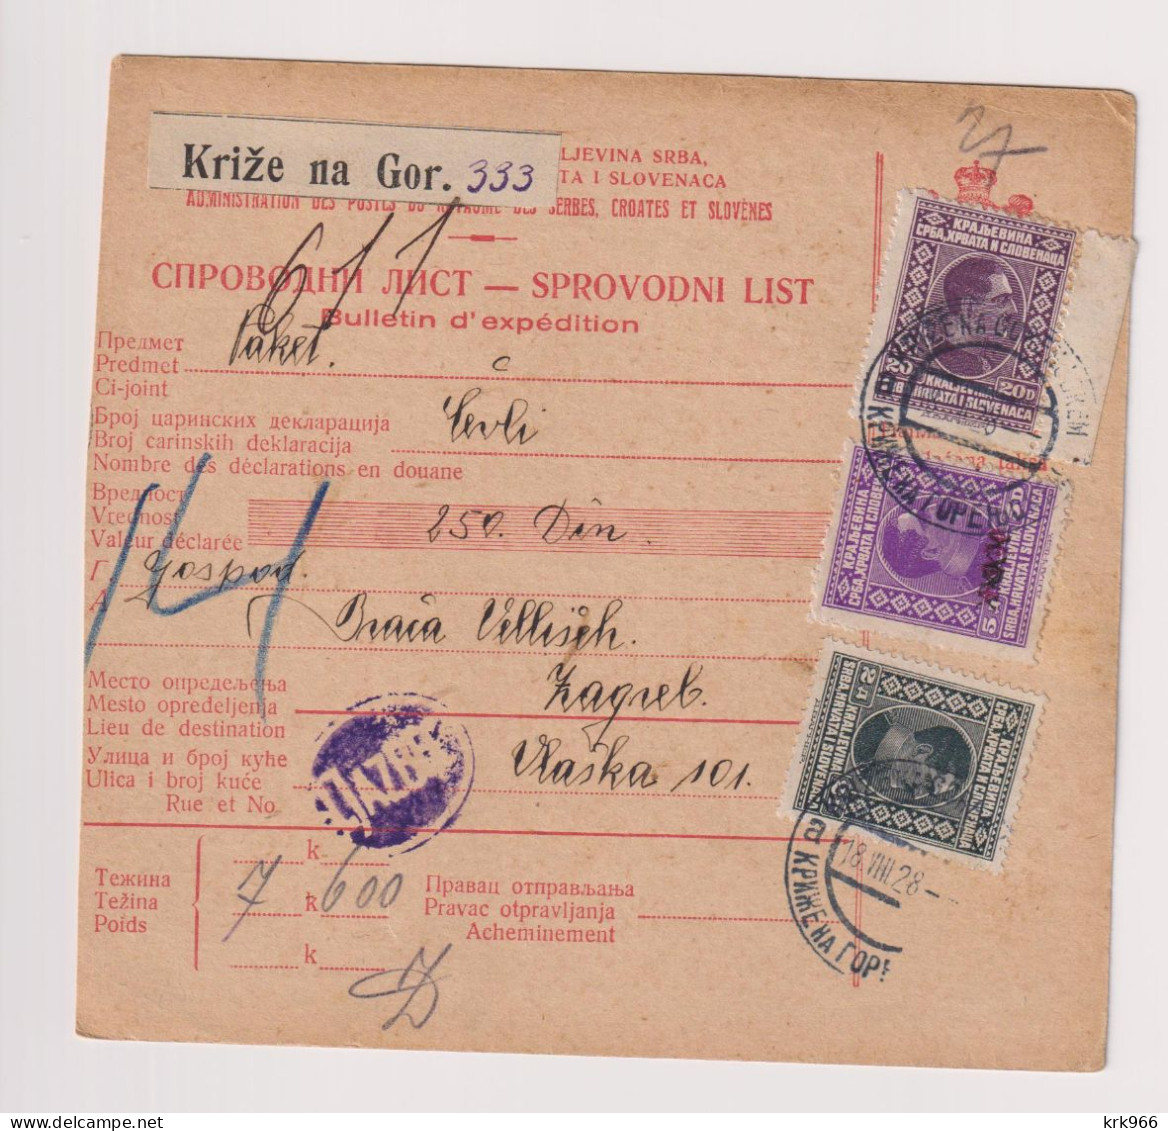 YUGOSLAVIA, KRIZE NA GORENJSKEM 1928  Parcel Card - Covers & Documents